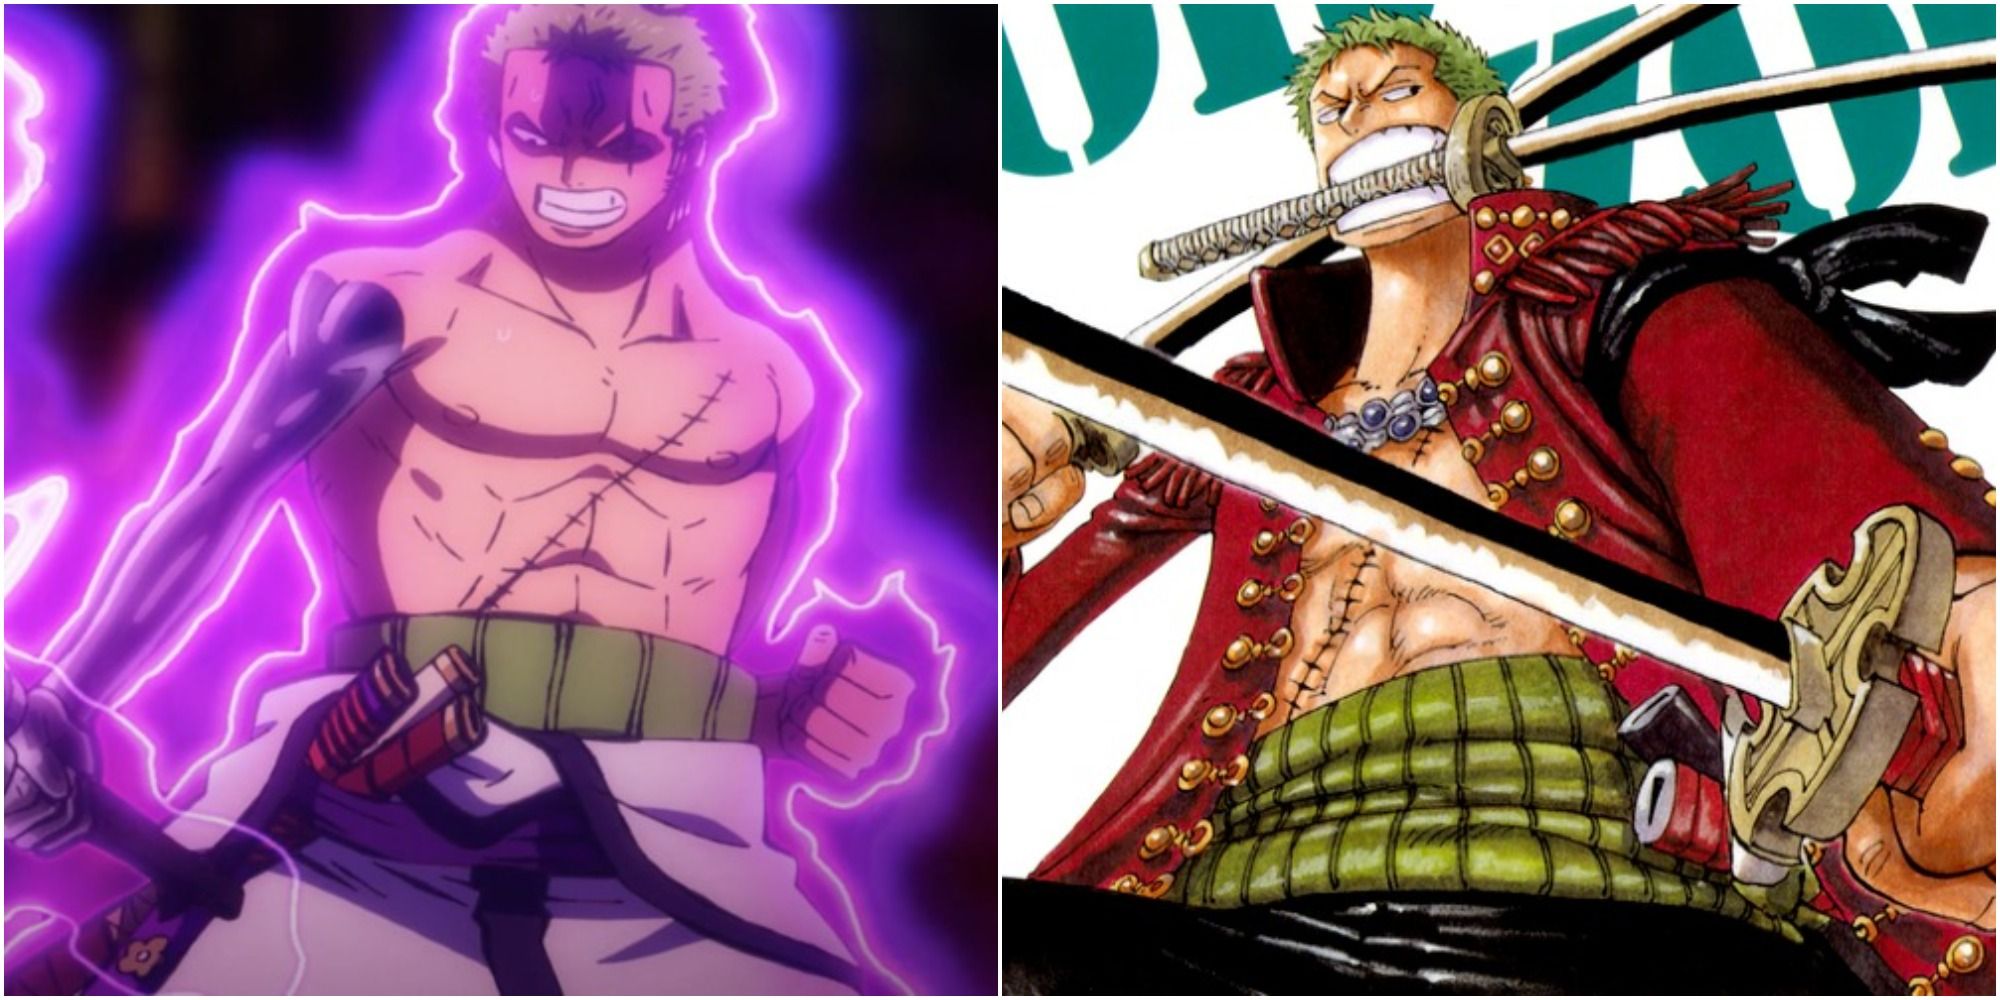 Zoro Will Use Mihawk's Yoru Sword!? - One Piece 